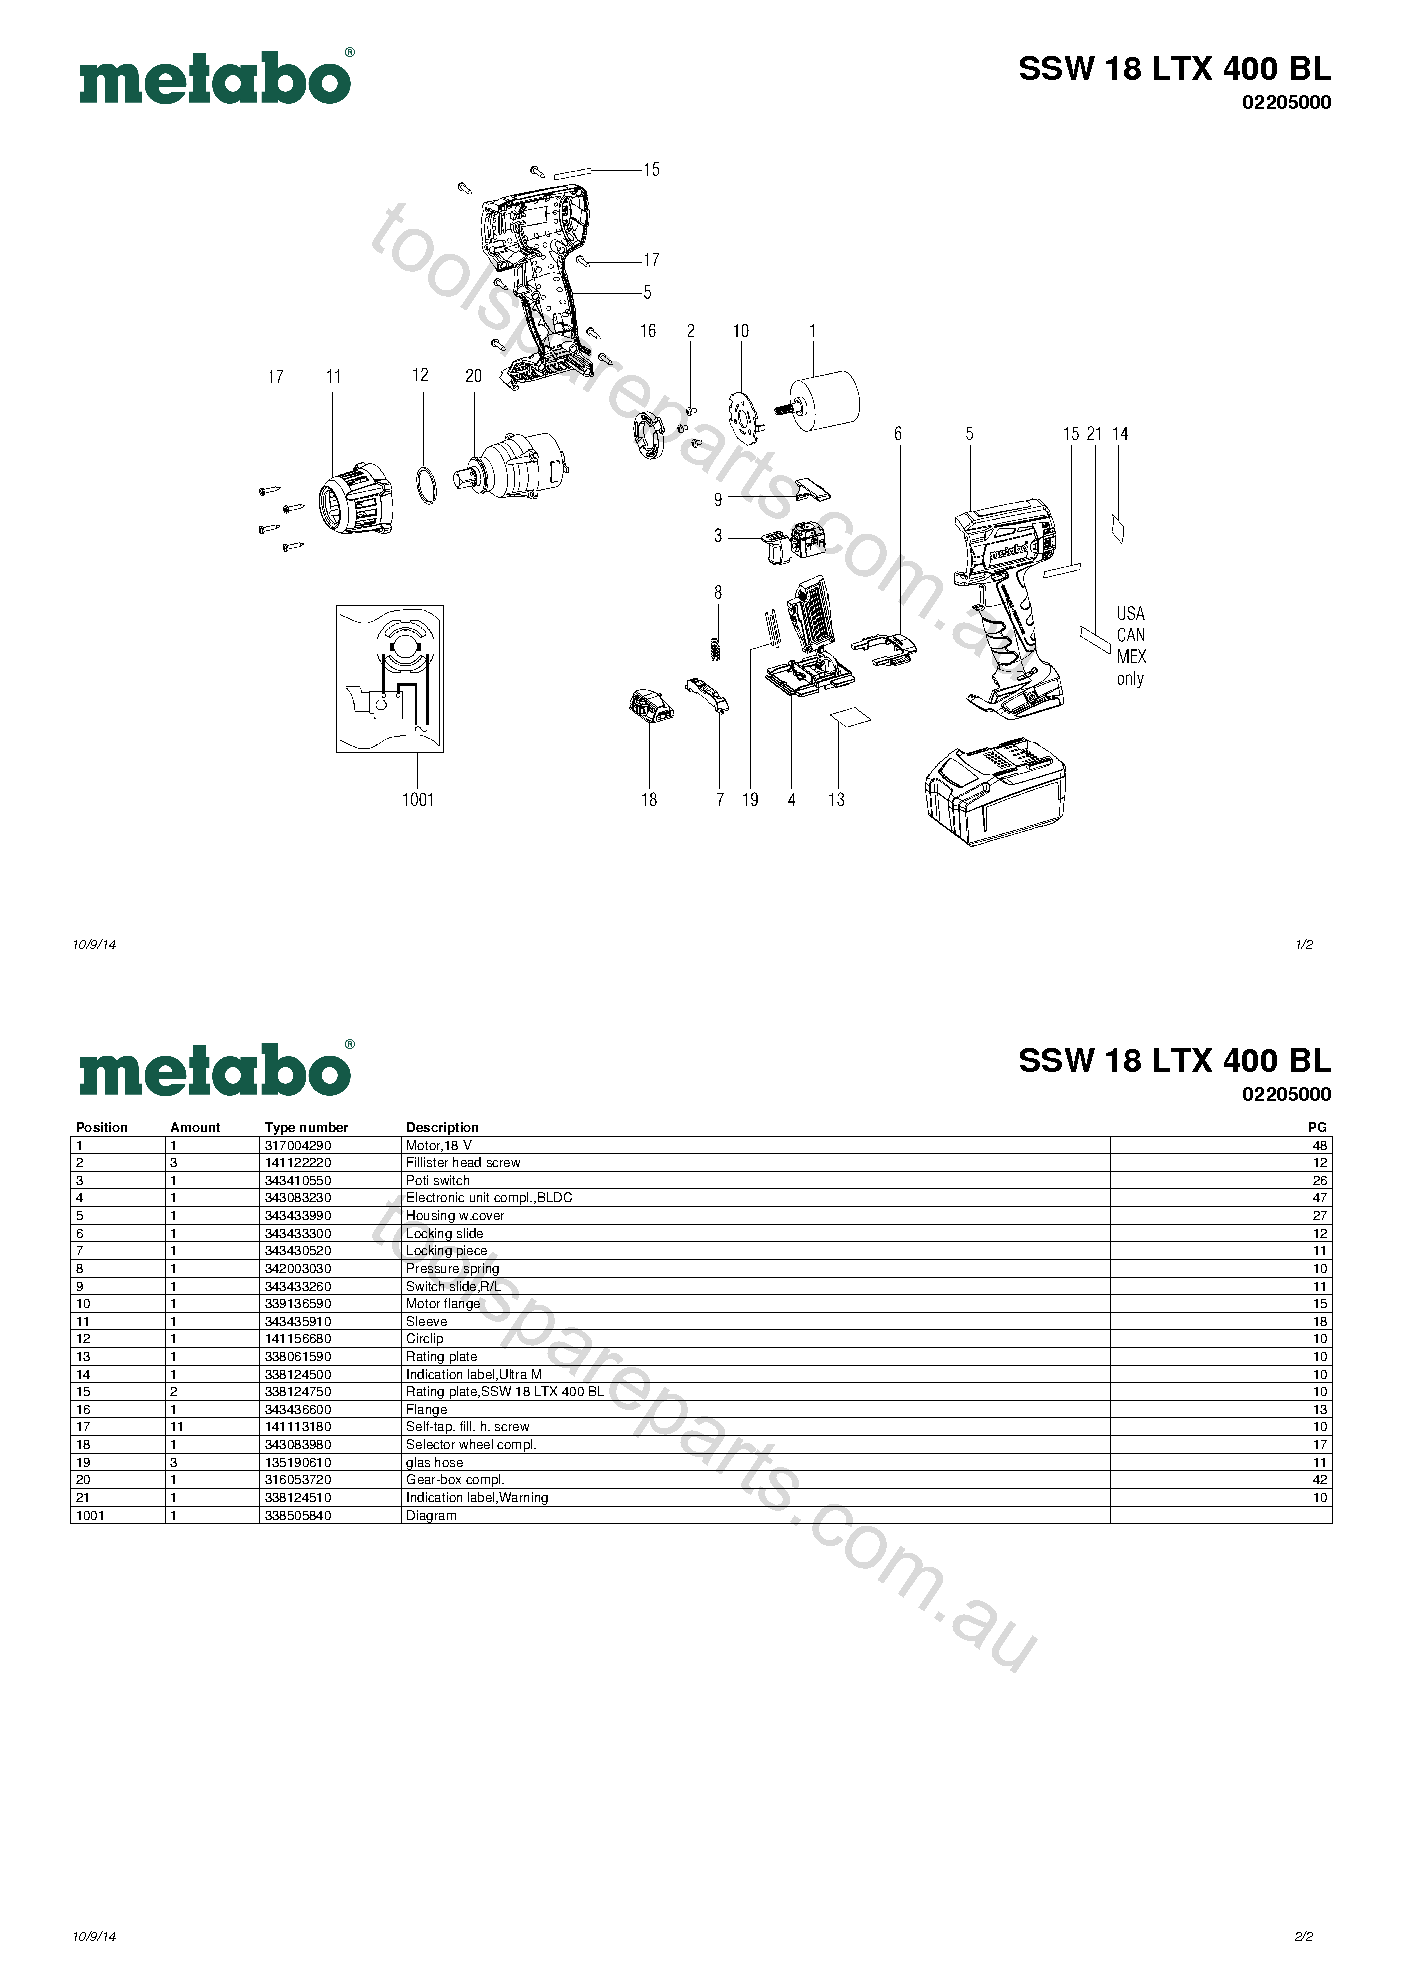 Metabo SSW 18 LTX 400 BL 02205000  Diagram 1